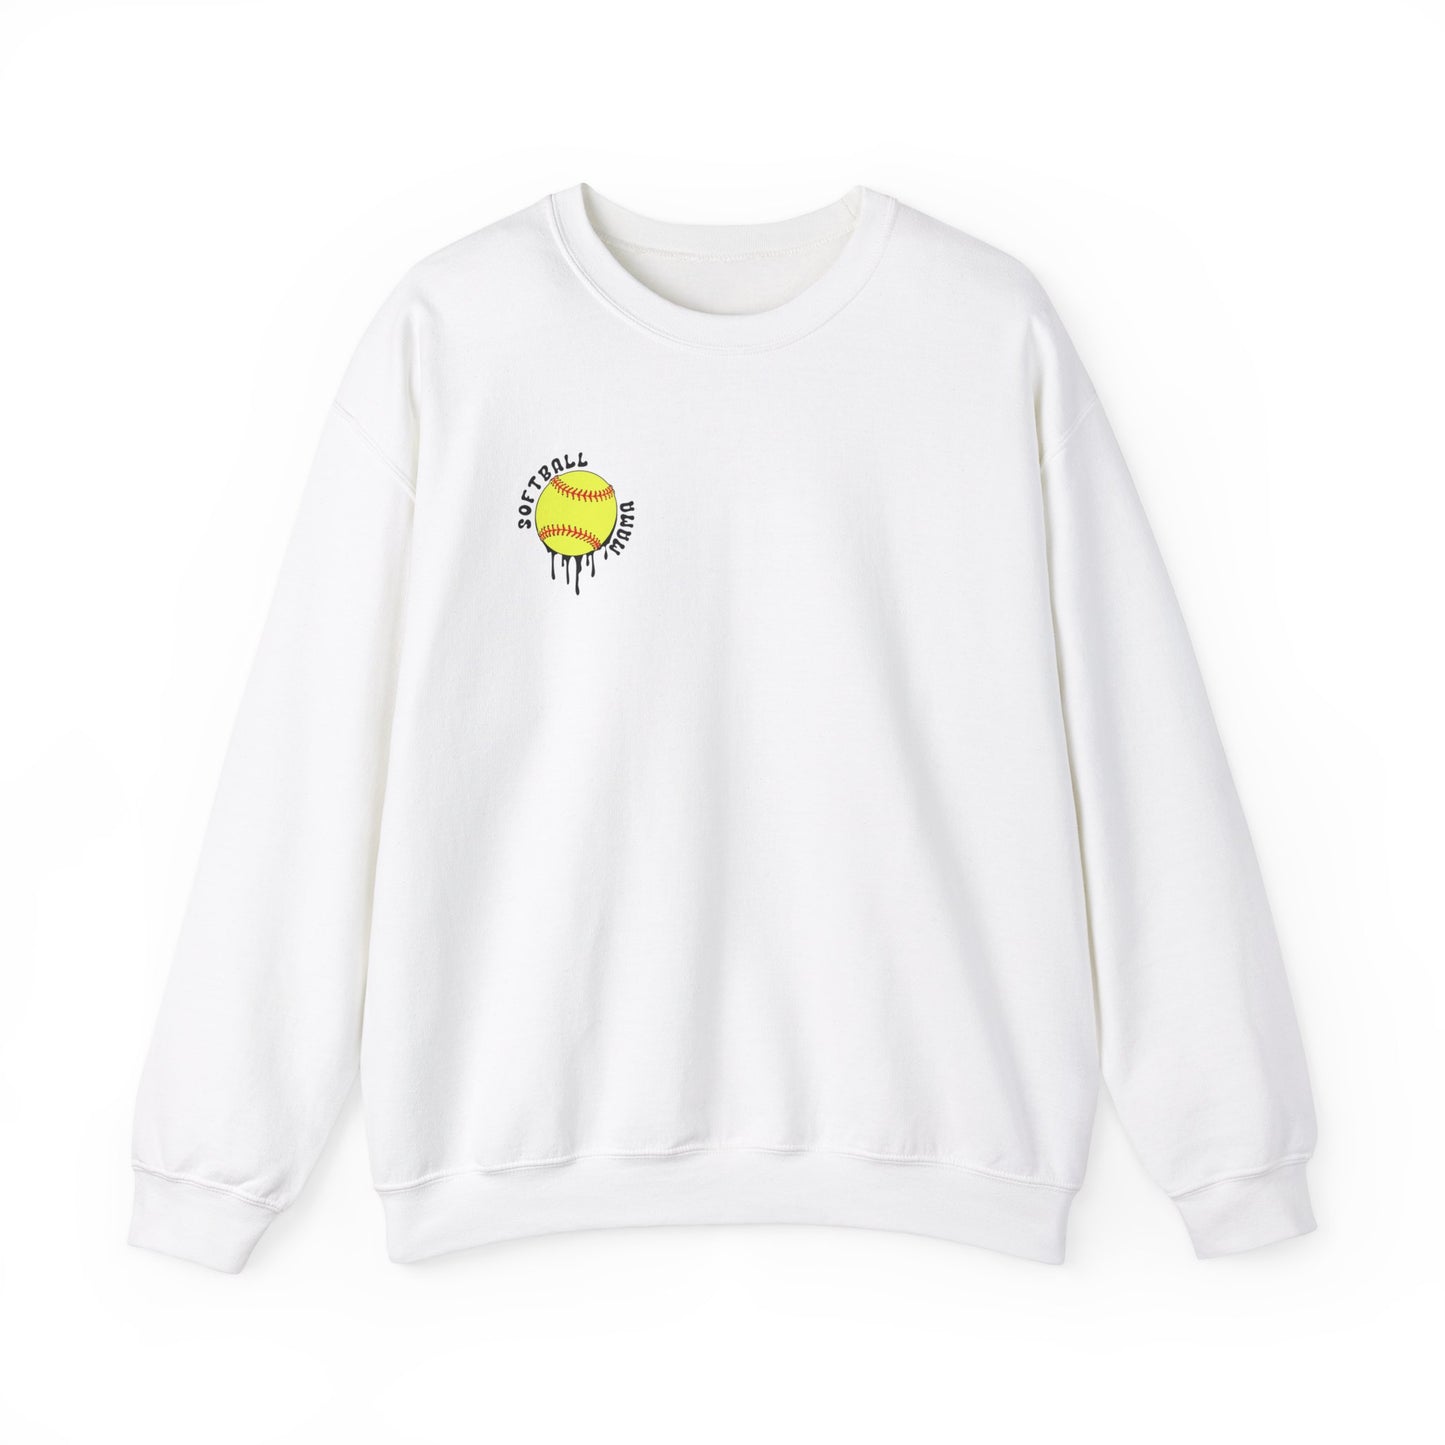 Loud Mouth Softball Mama Sweatshirt (black letters)